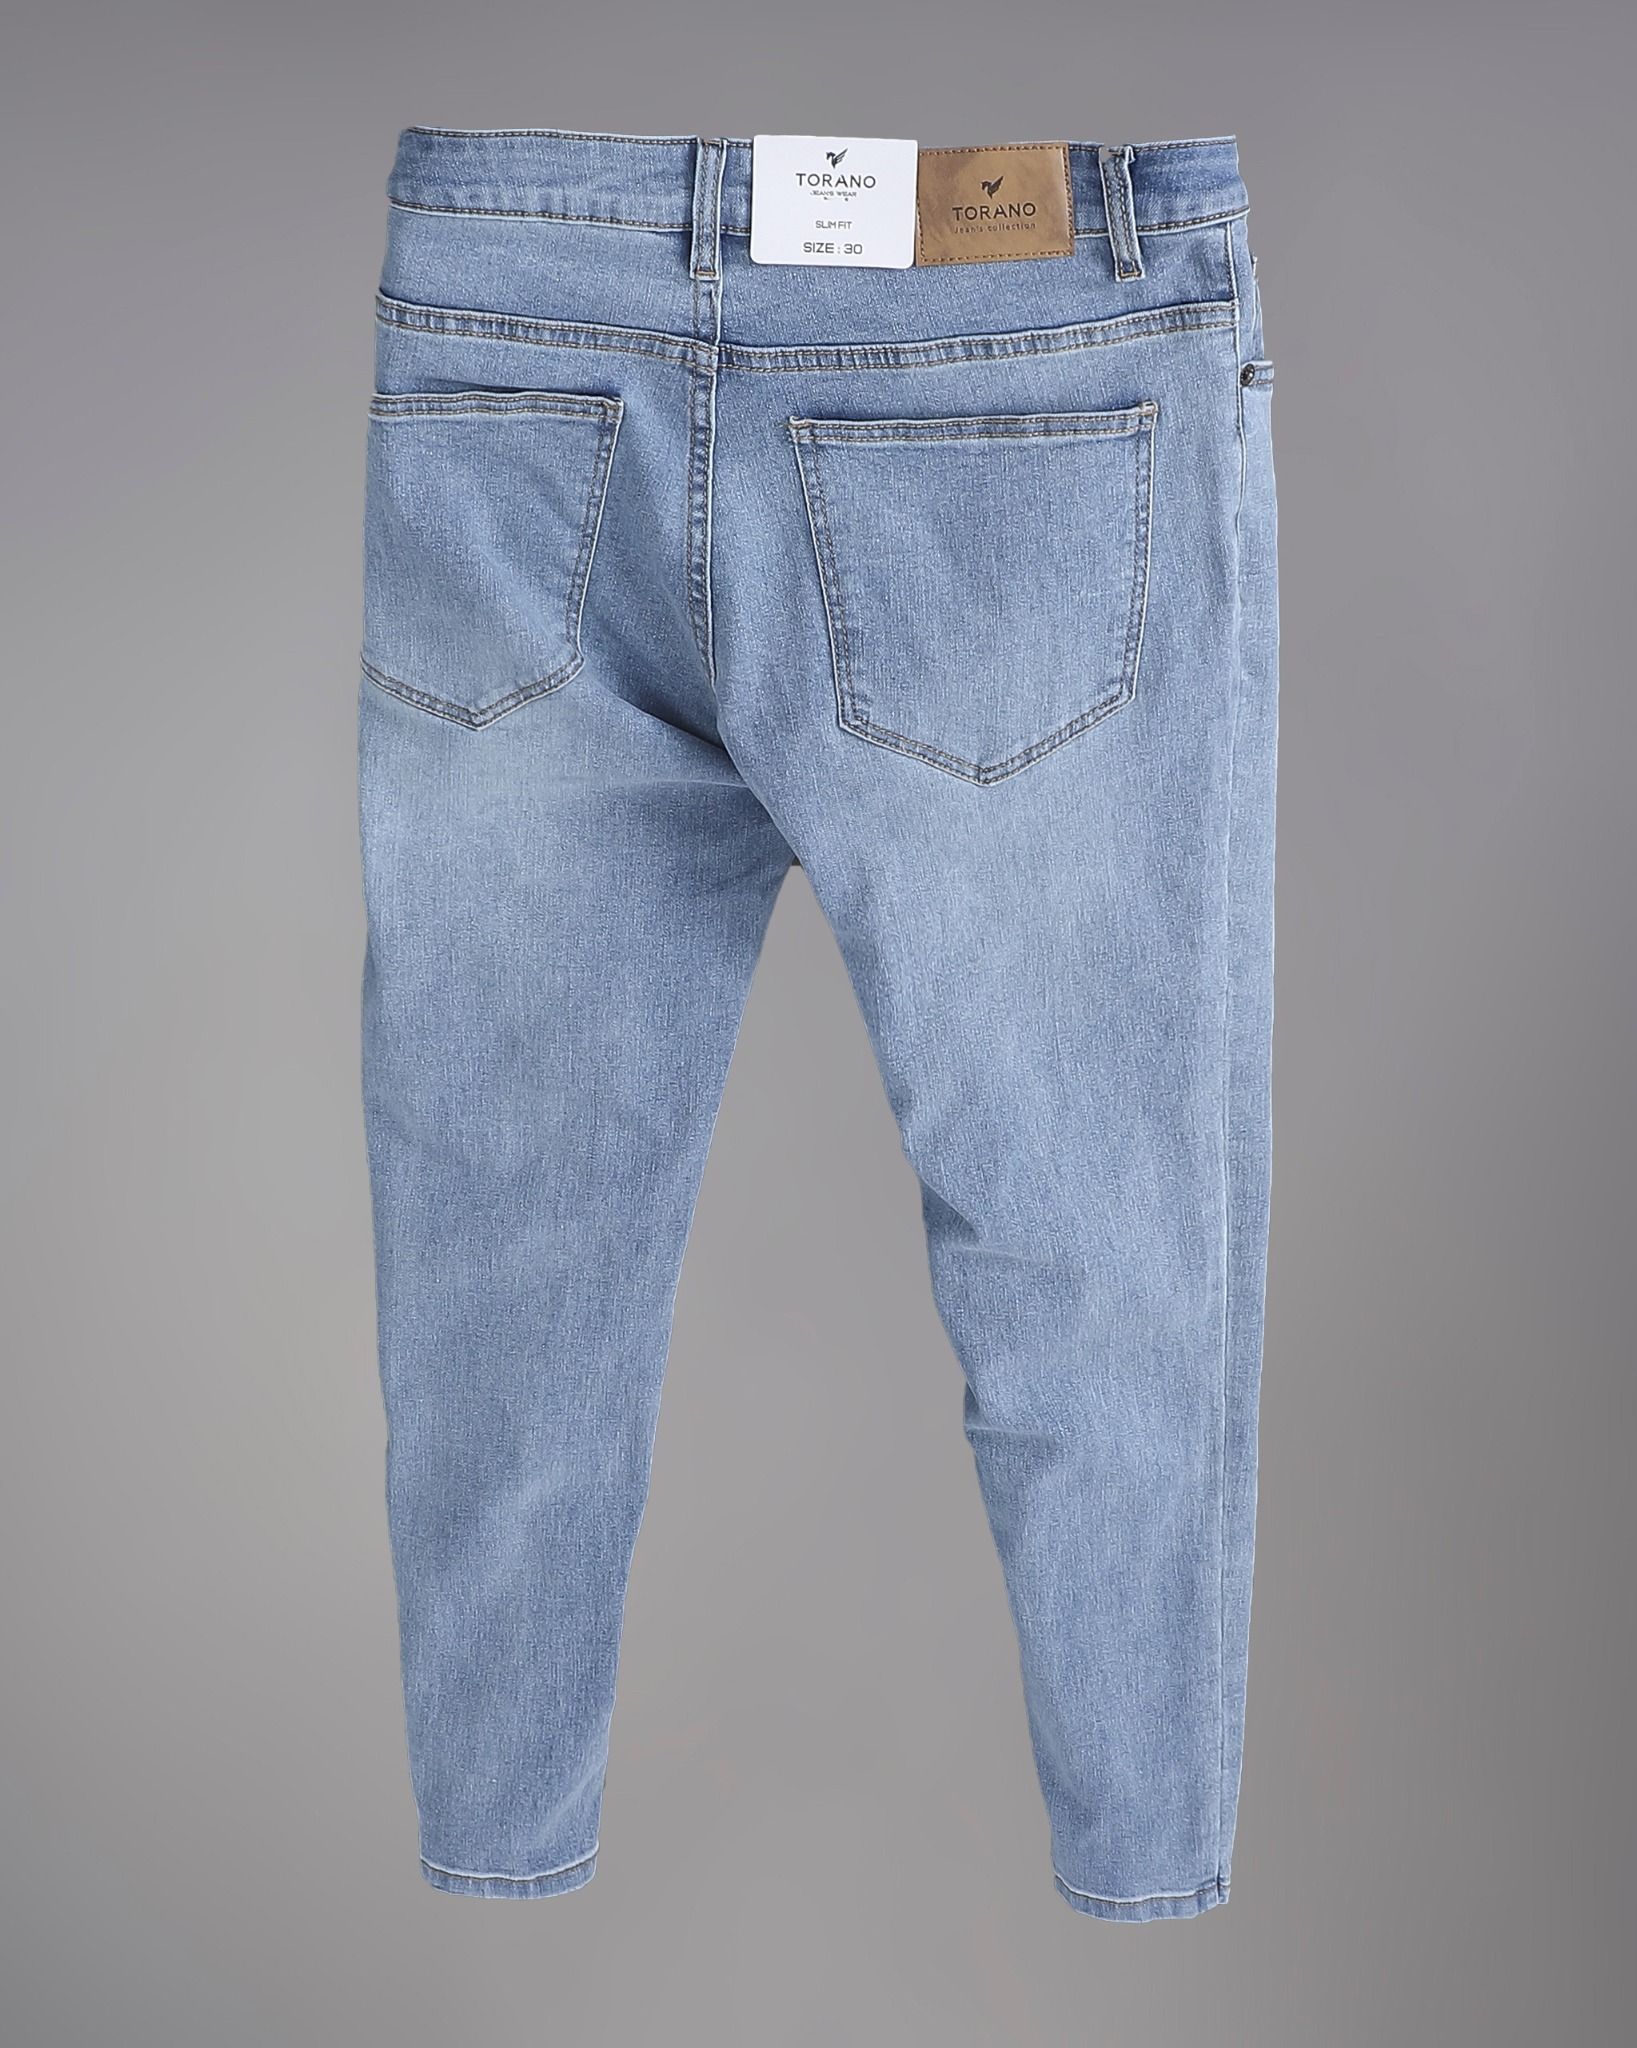  Quần Jeans basic Slim DABJ010 